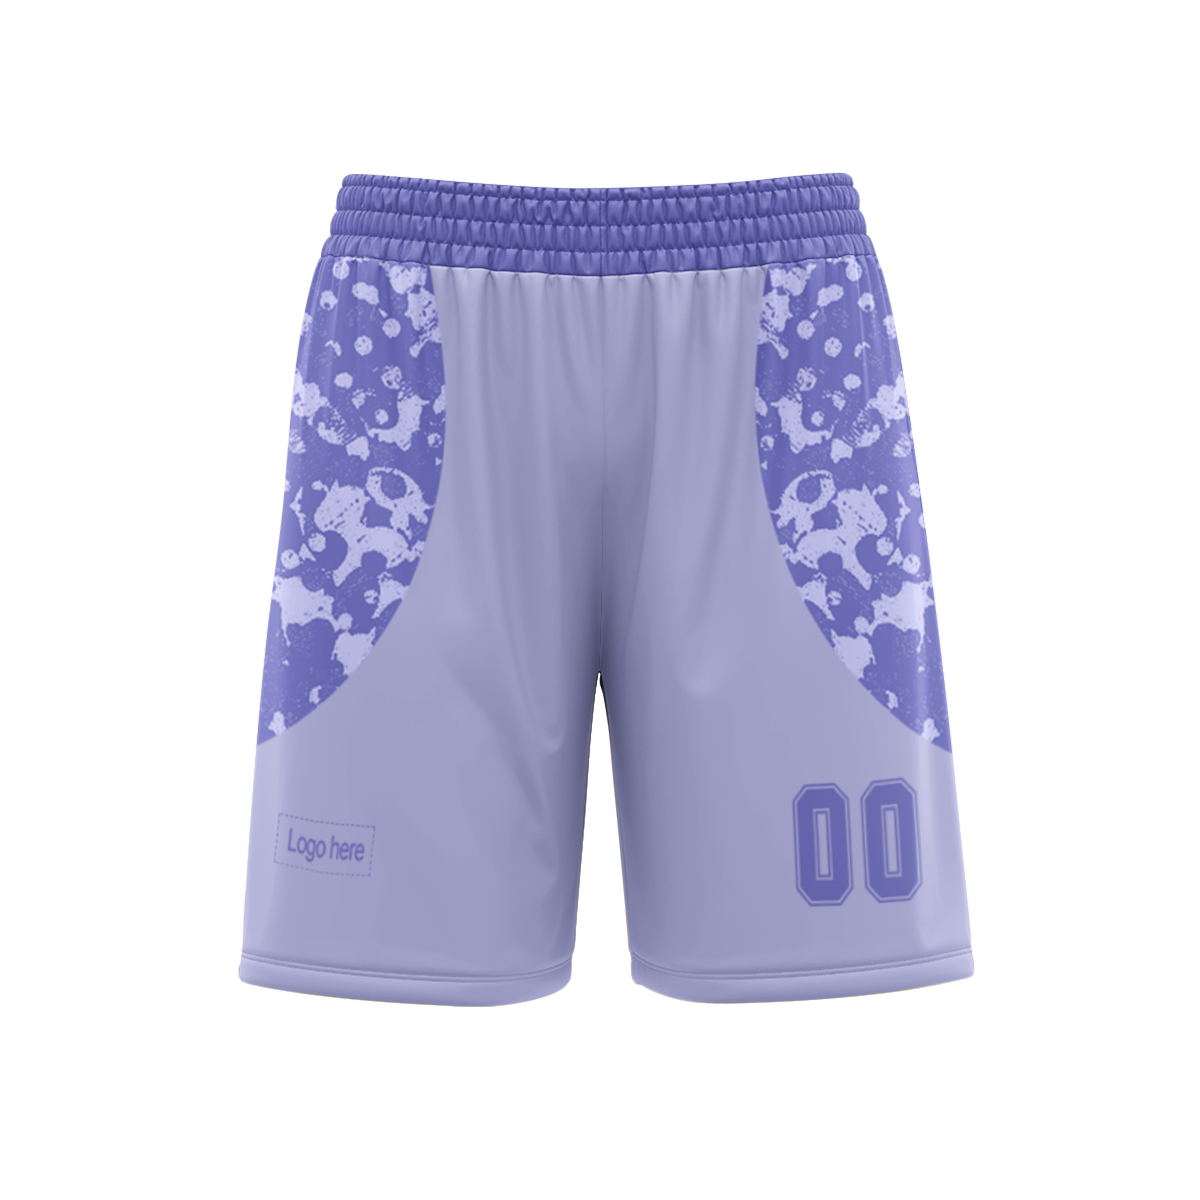 custom-cool-design-basketball-shirts-unisex-sublimation-print-on-demand-basketball-uniforms-at-cj-pod-7